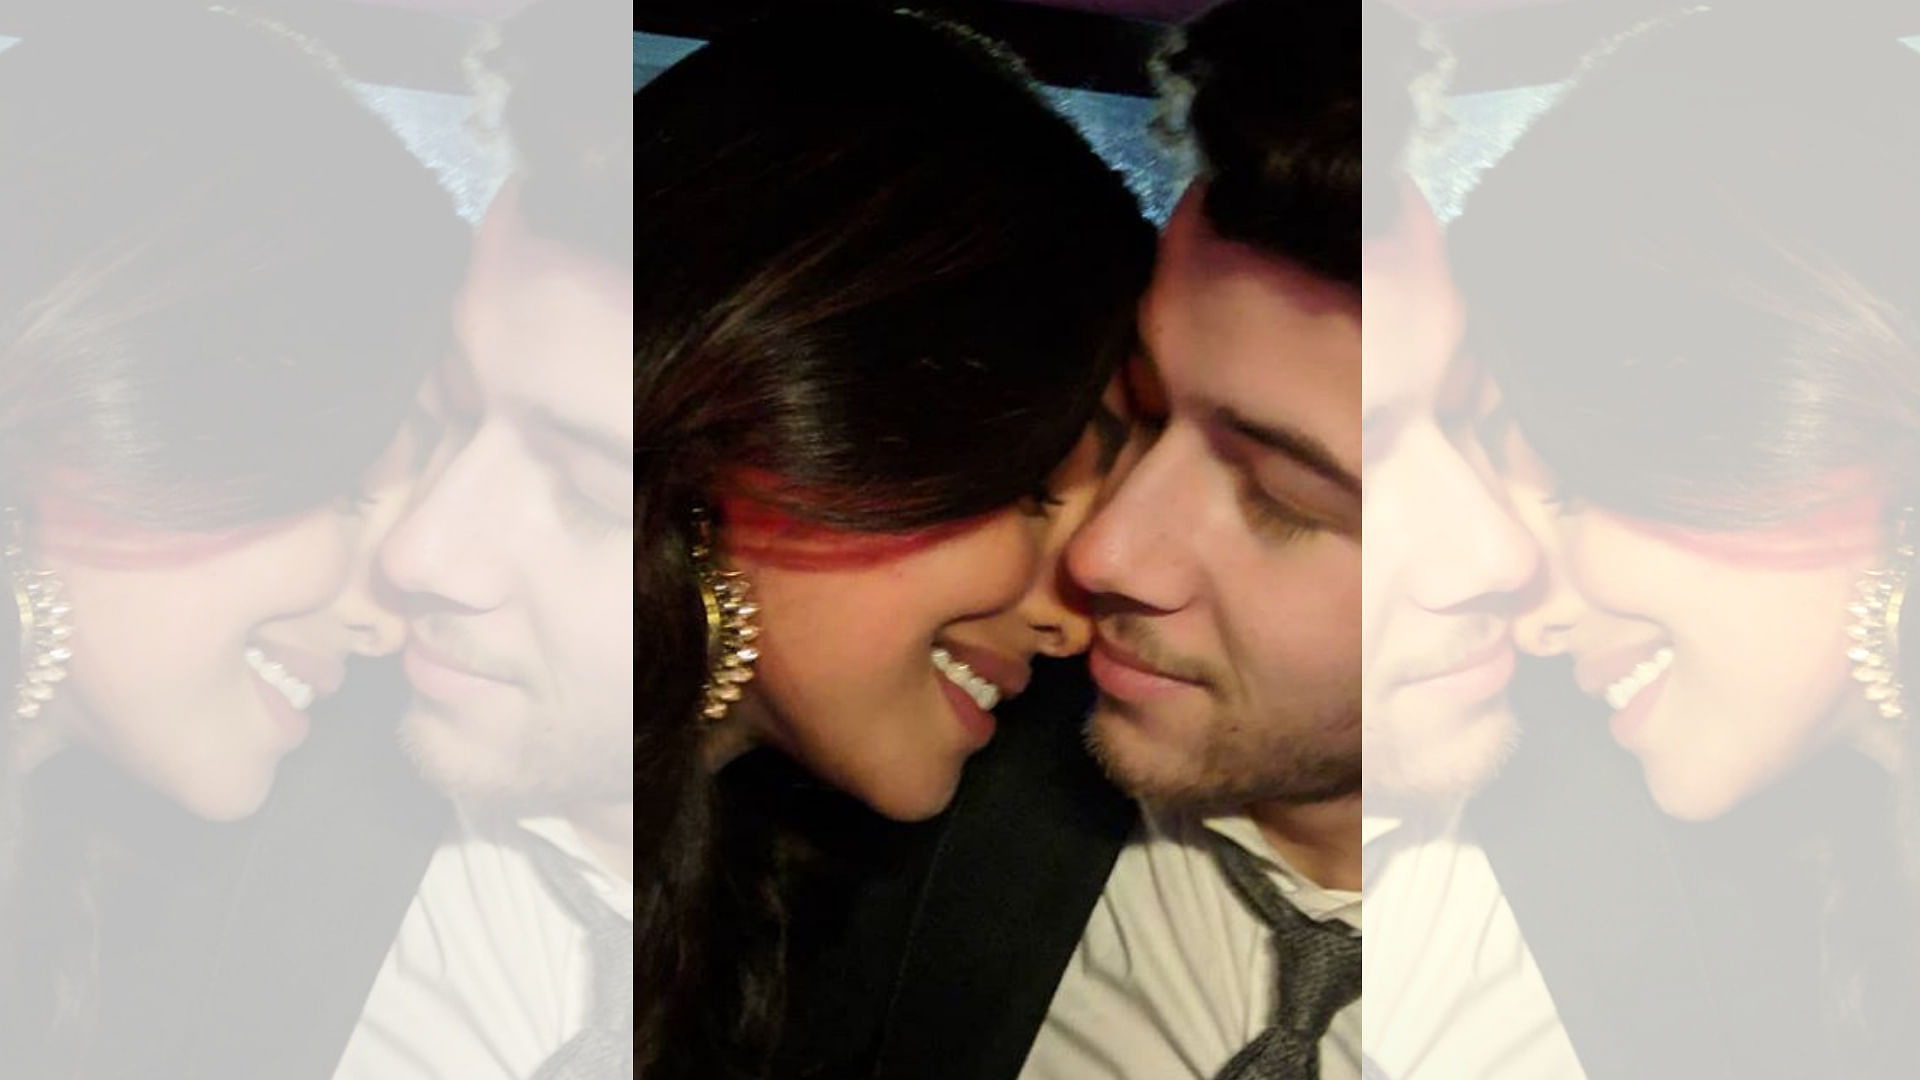 Priyanka Chopra welcomed Nick Jonas to India in a social media post.